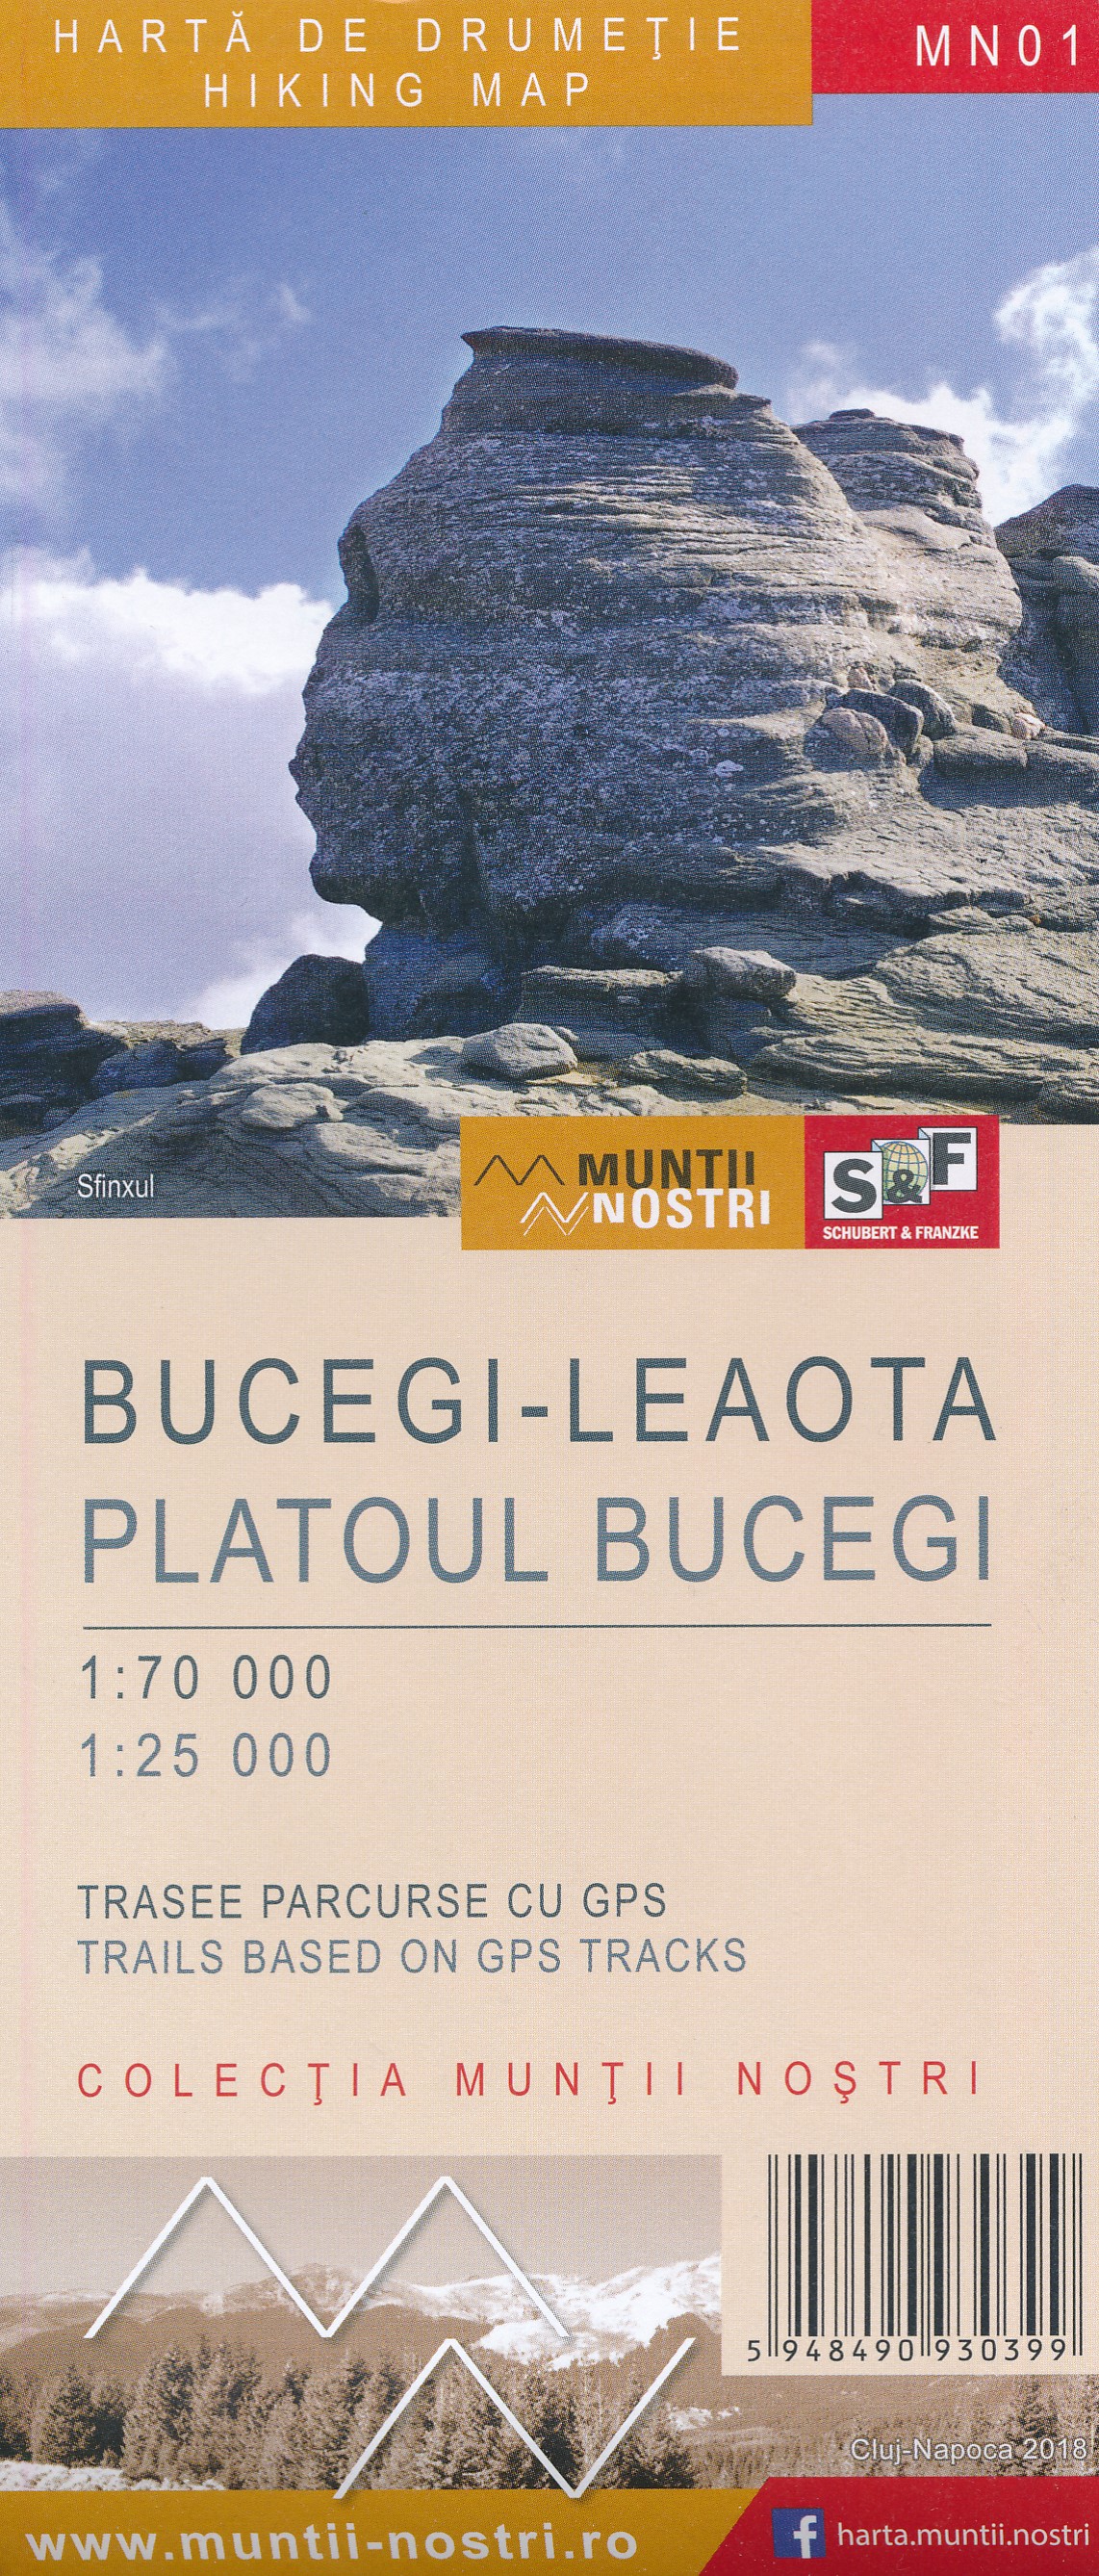 Online bestellen: Wandelkaart MN01 Muntii Nostri Bucegi - Leaota - Platoul Bucegi | Schubert - Franzke